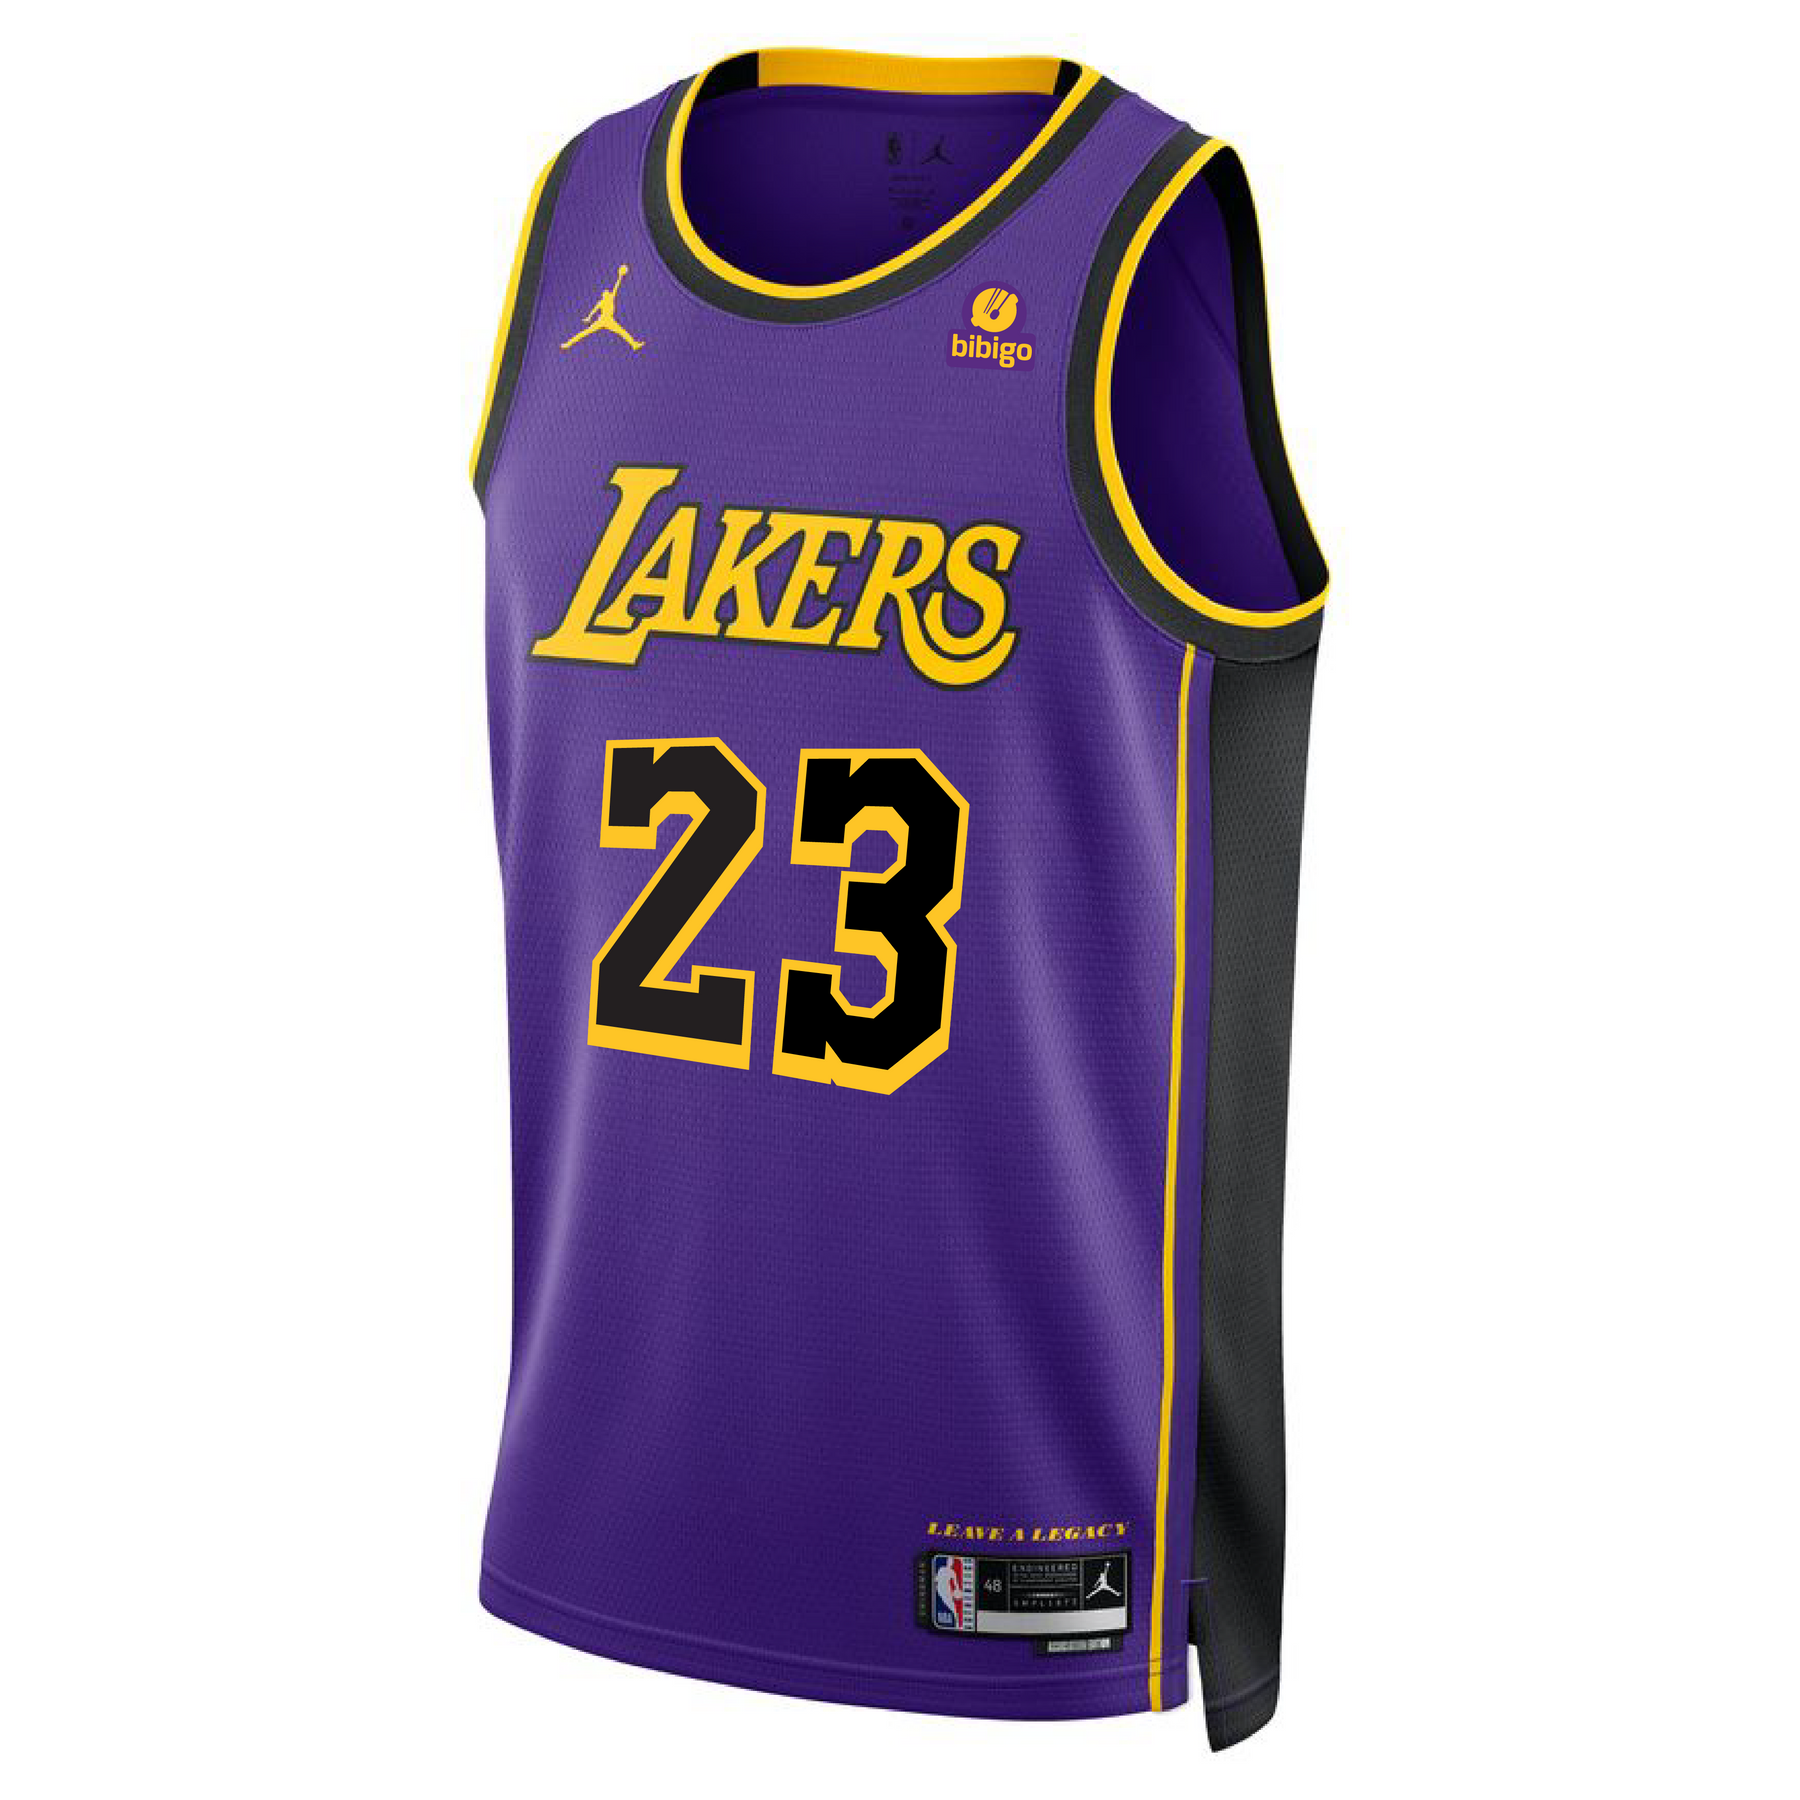 Buy Lakers Basketball Jersey NBA Jersey Lebron James #23 Lakers